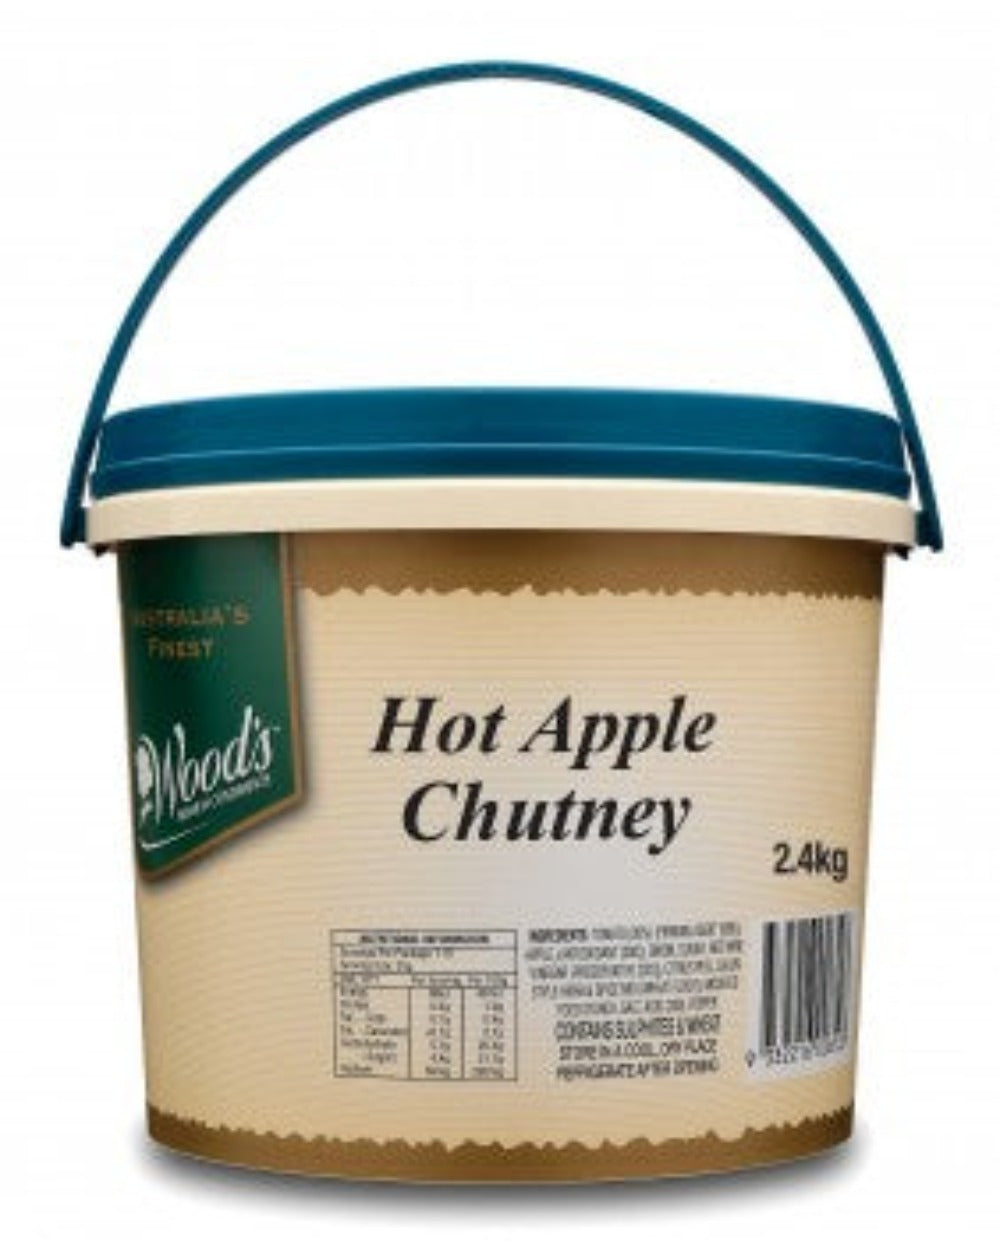 Wood's Chutney Hot Apple 2.4Kg